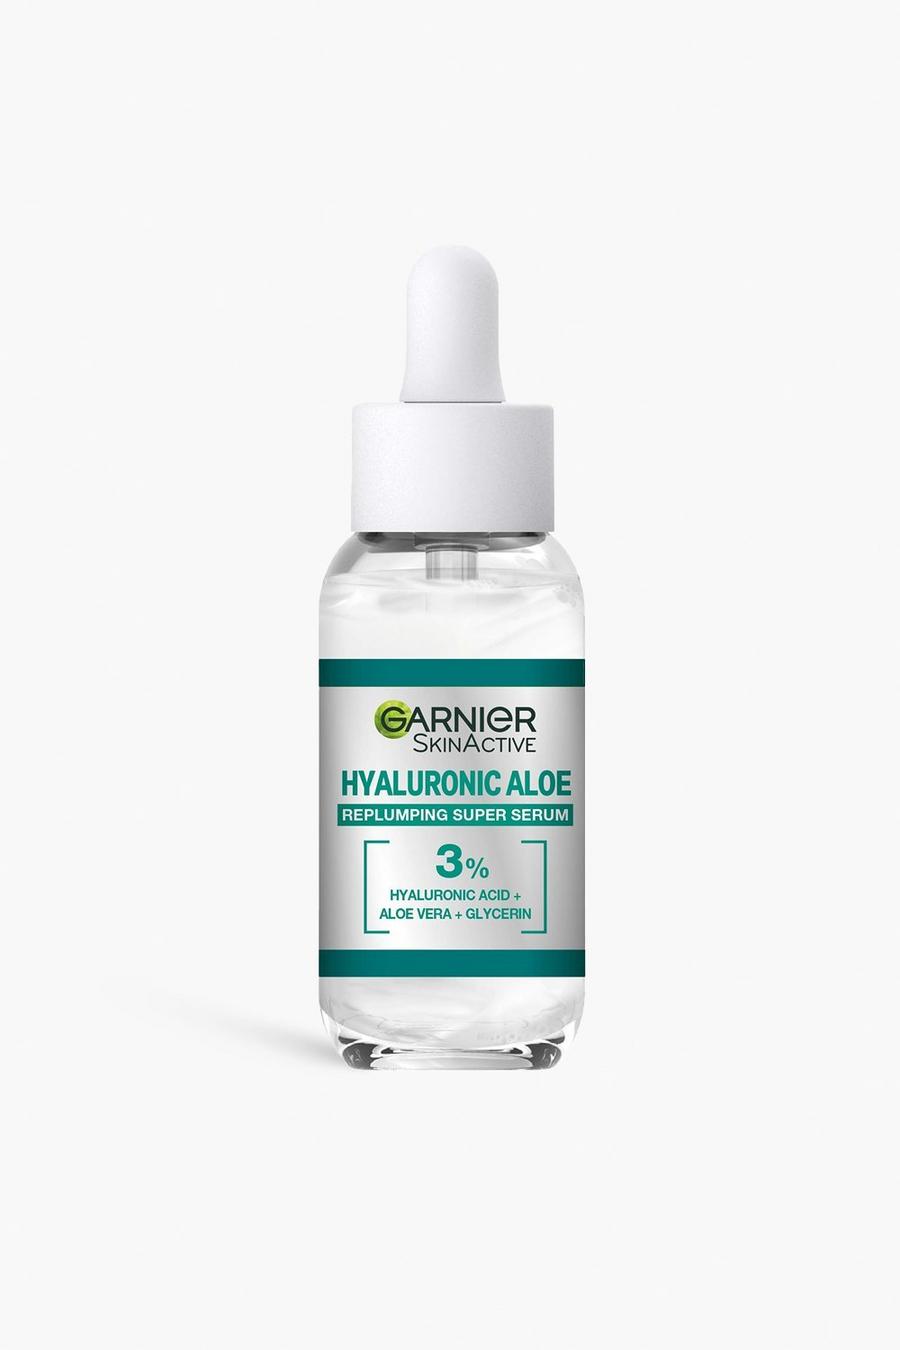 White Garnier SkinActive Hyaluronic Aloe Super Serum, With 3% Hyaluronic Acid Aloe Vera & Glycerin